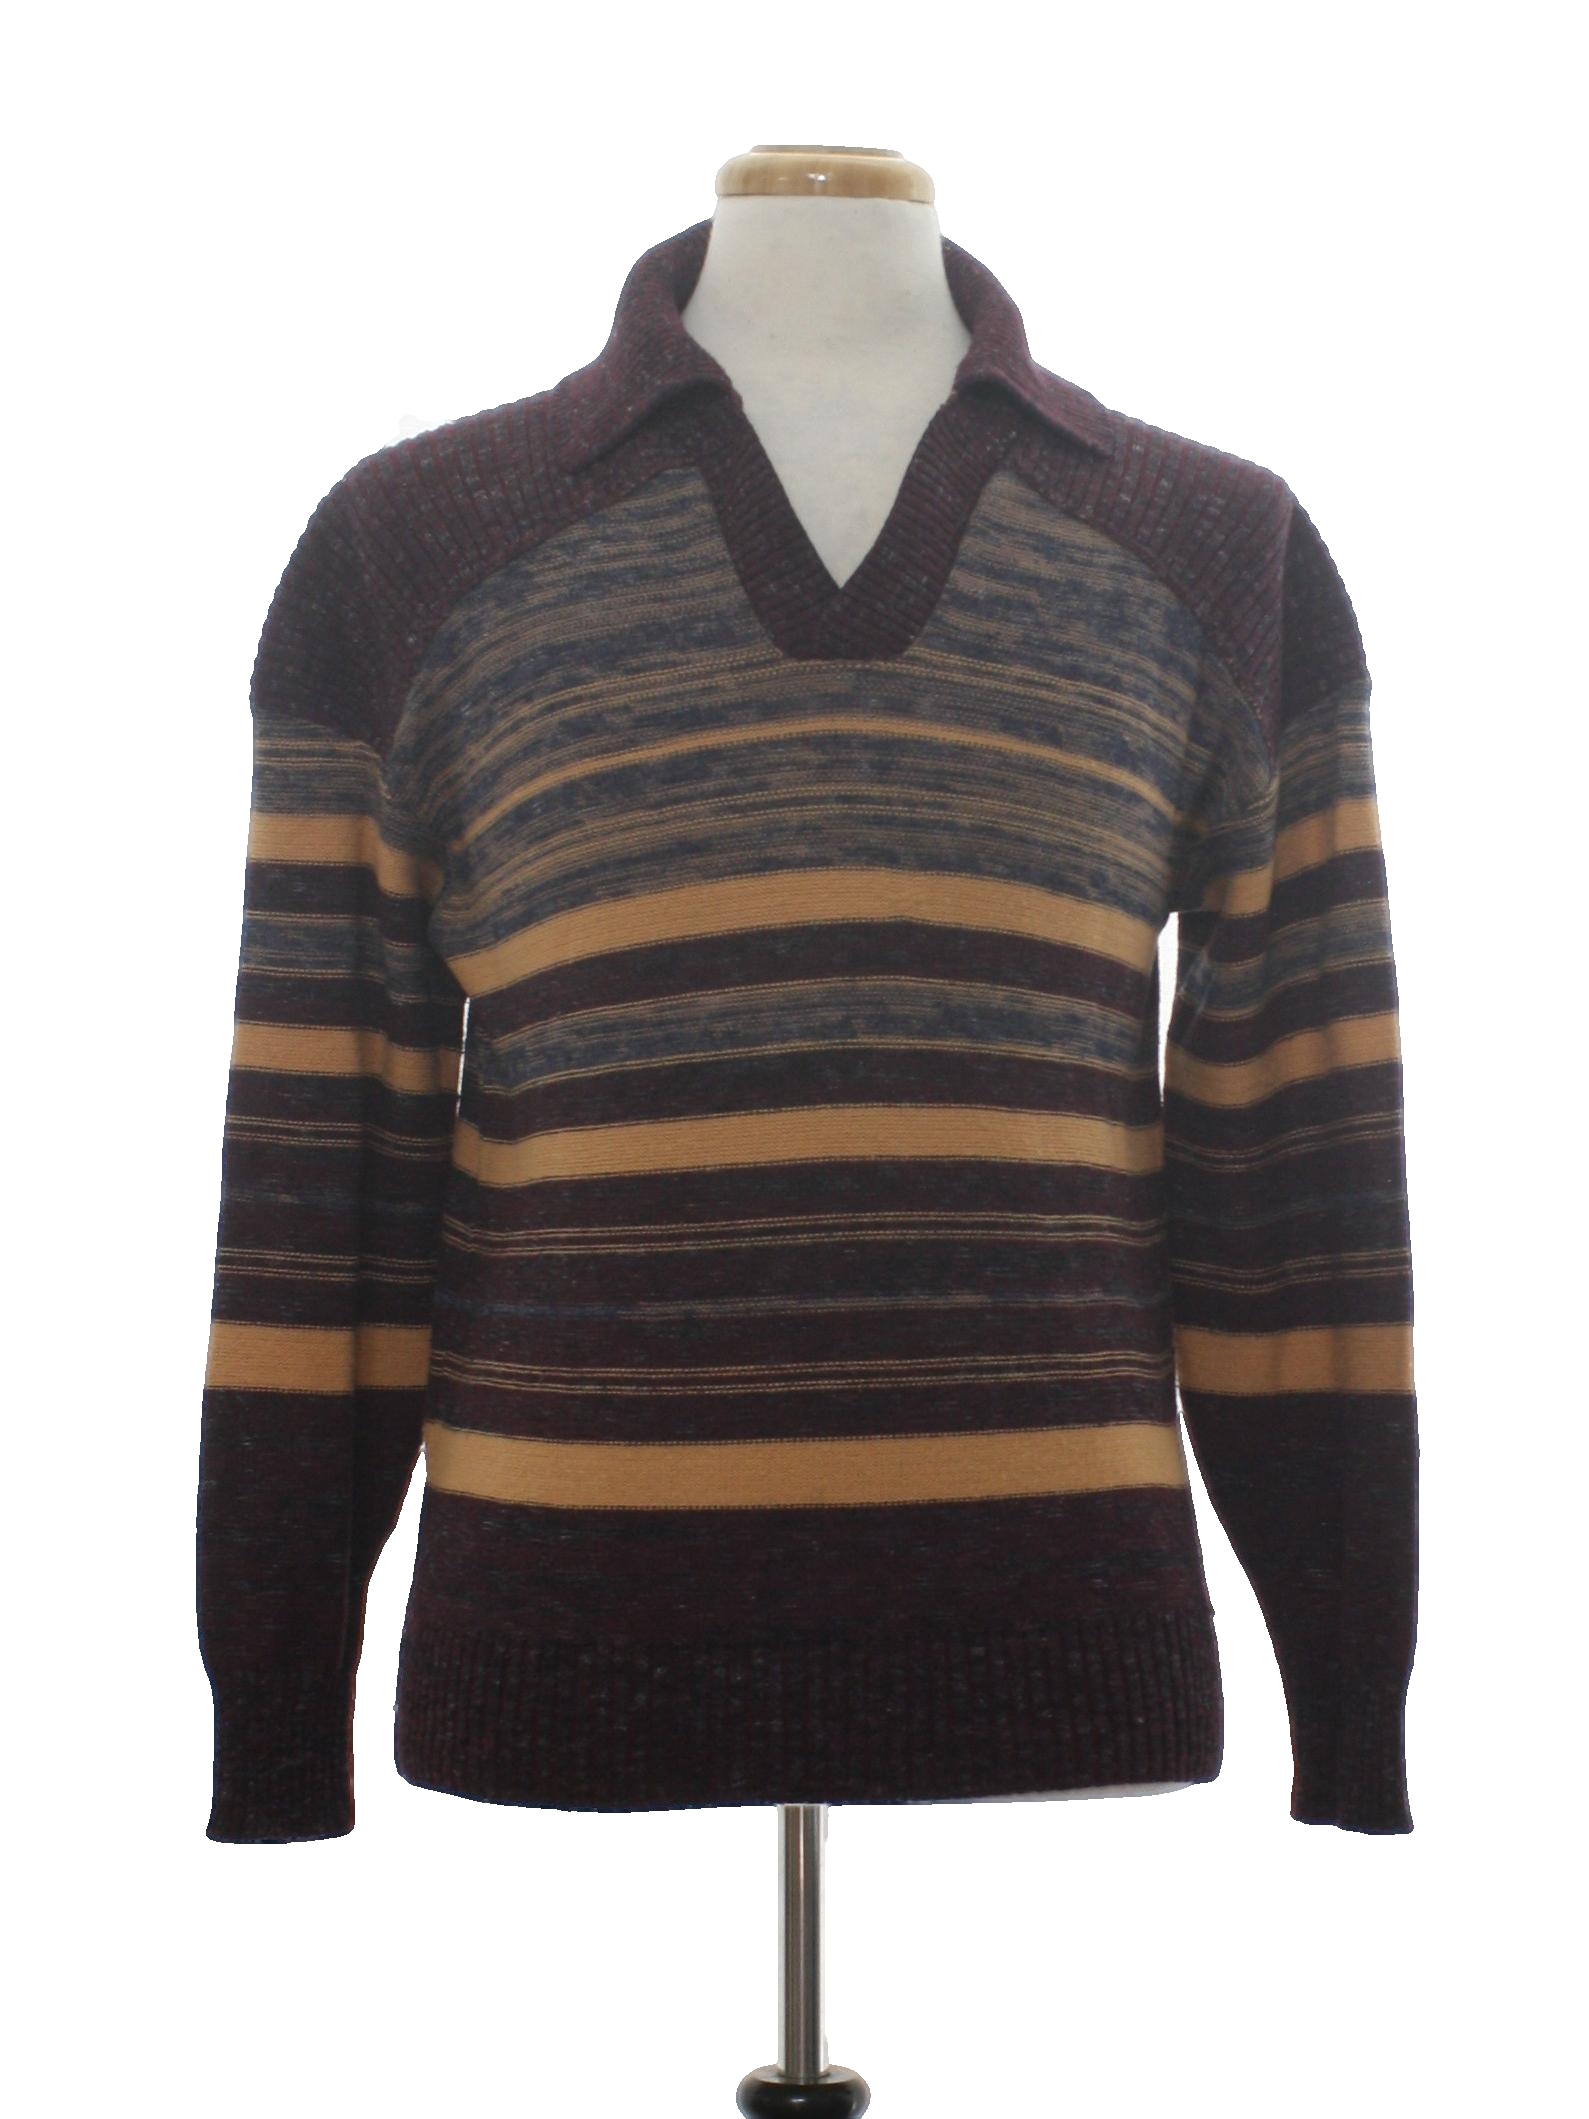 Retro 70s Sweater (Fabric Label) : 70s -Fabric Label- Mens heather ...